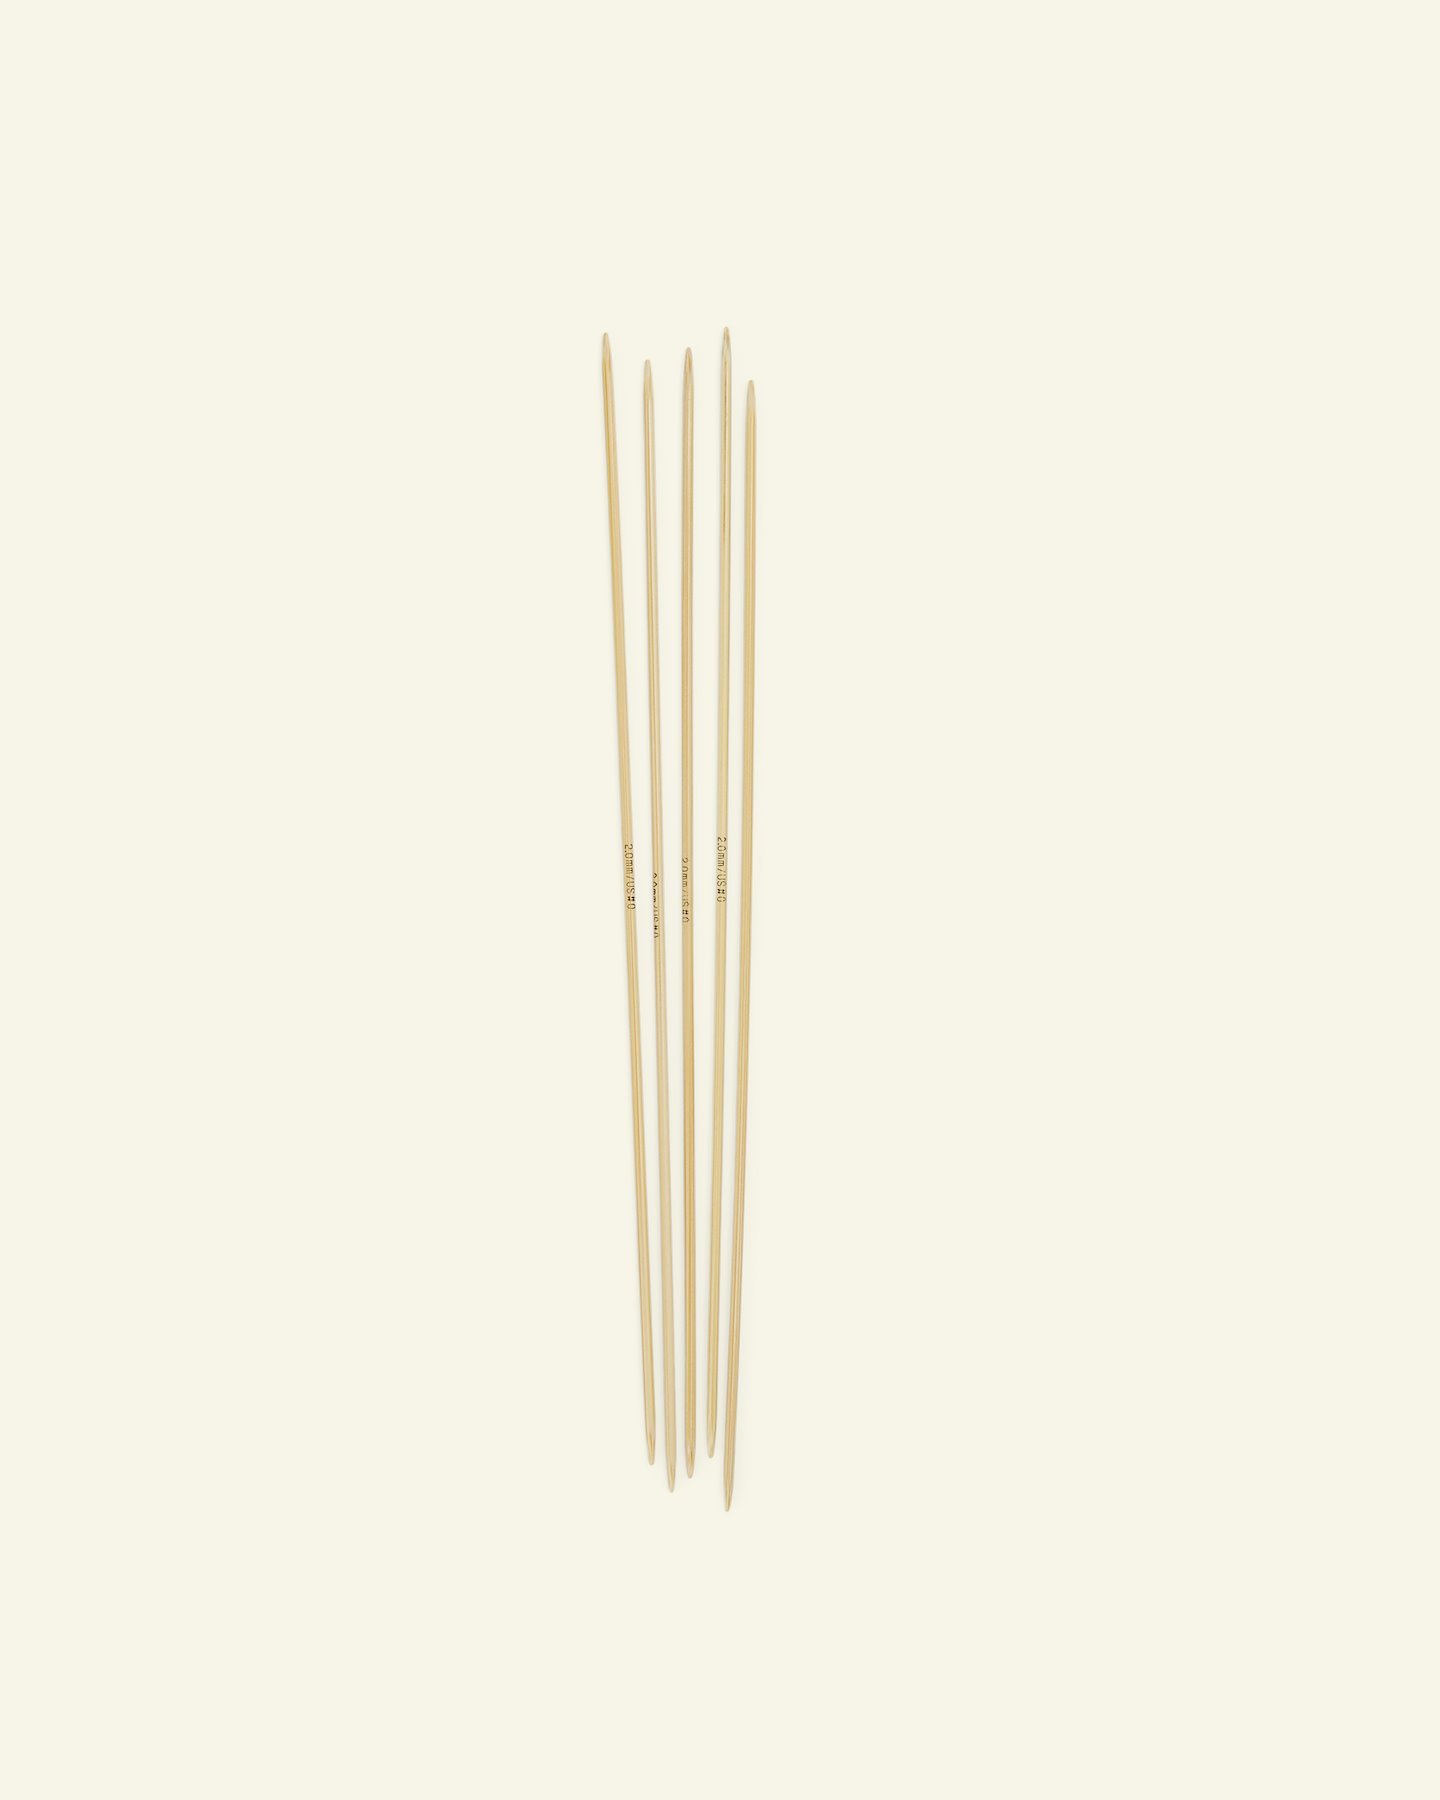 Addi Strumpfstricknadeln bambus 20cm 2,0 83272_pack